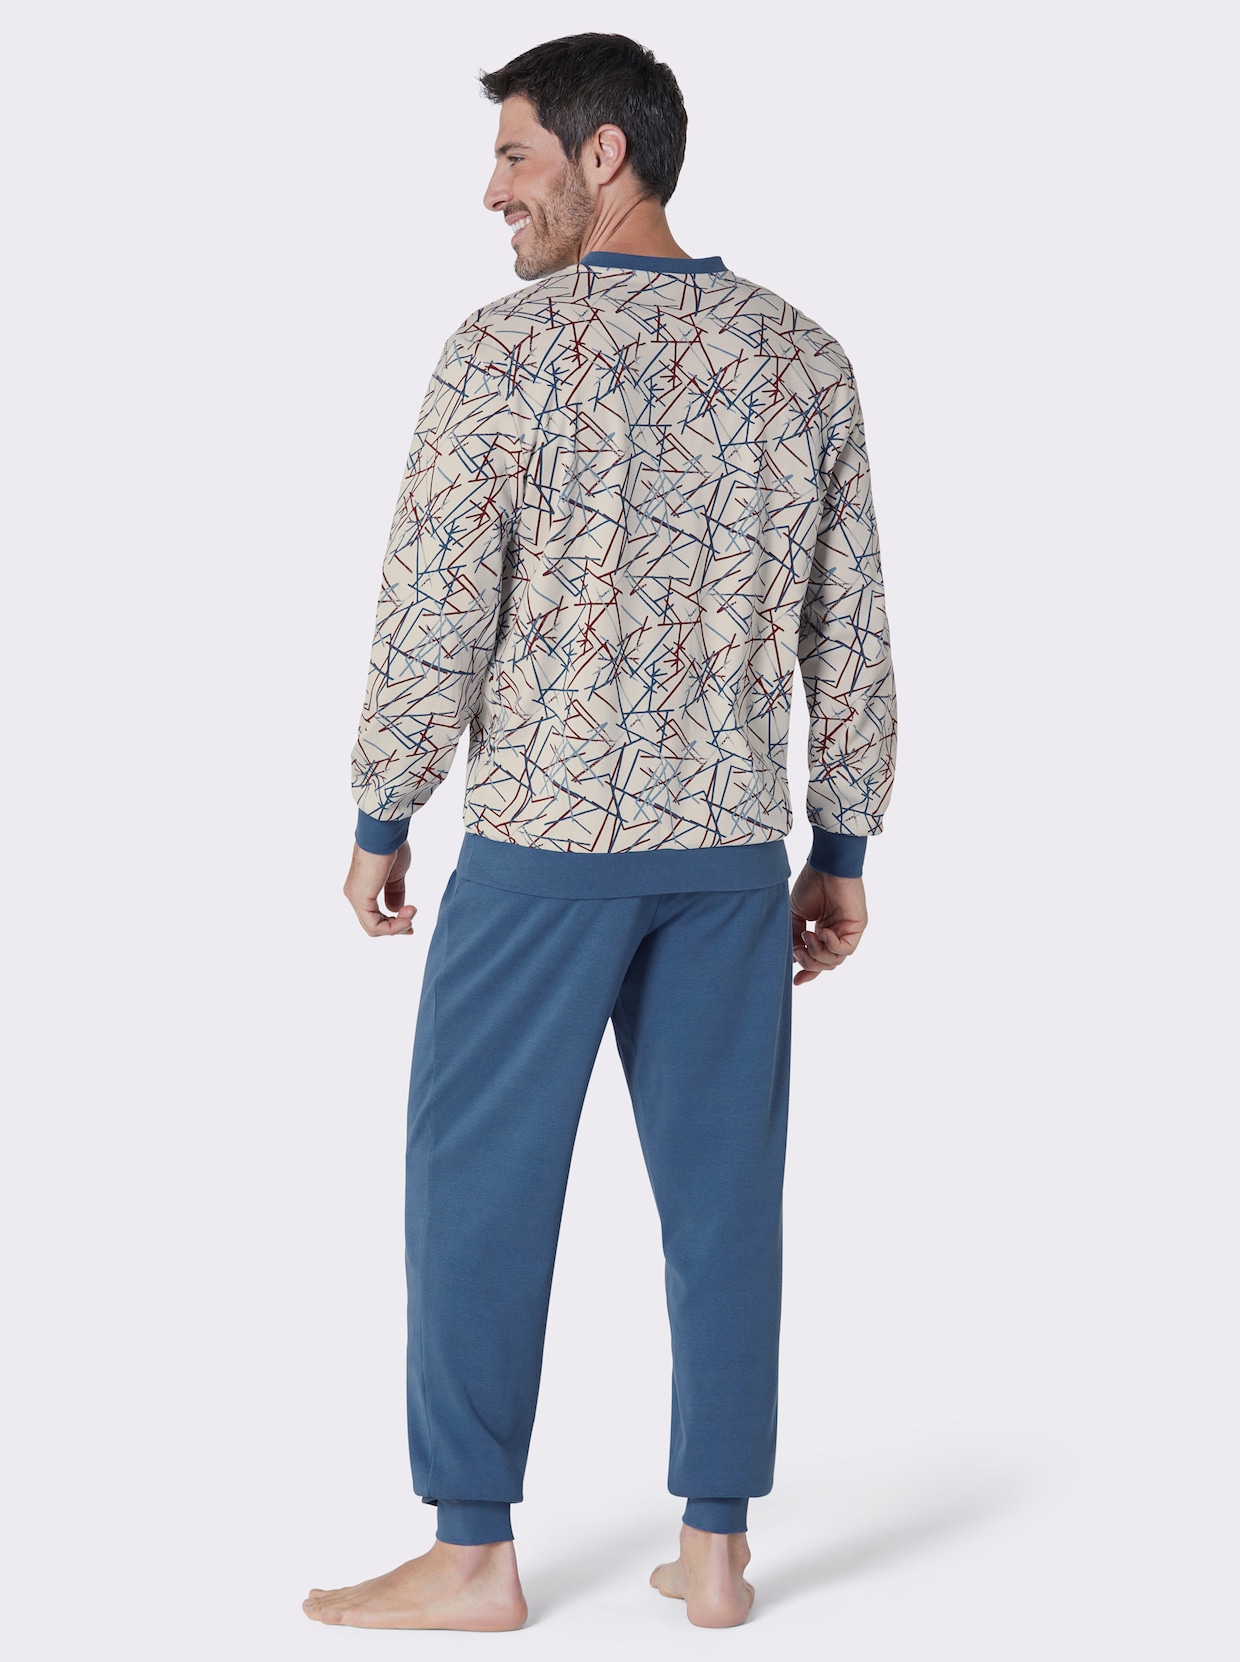 KINGsCLUB Pyjama - lichtgrijs/jeansblauw gedessineerd